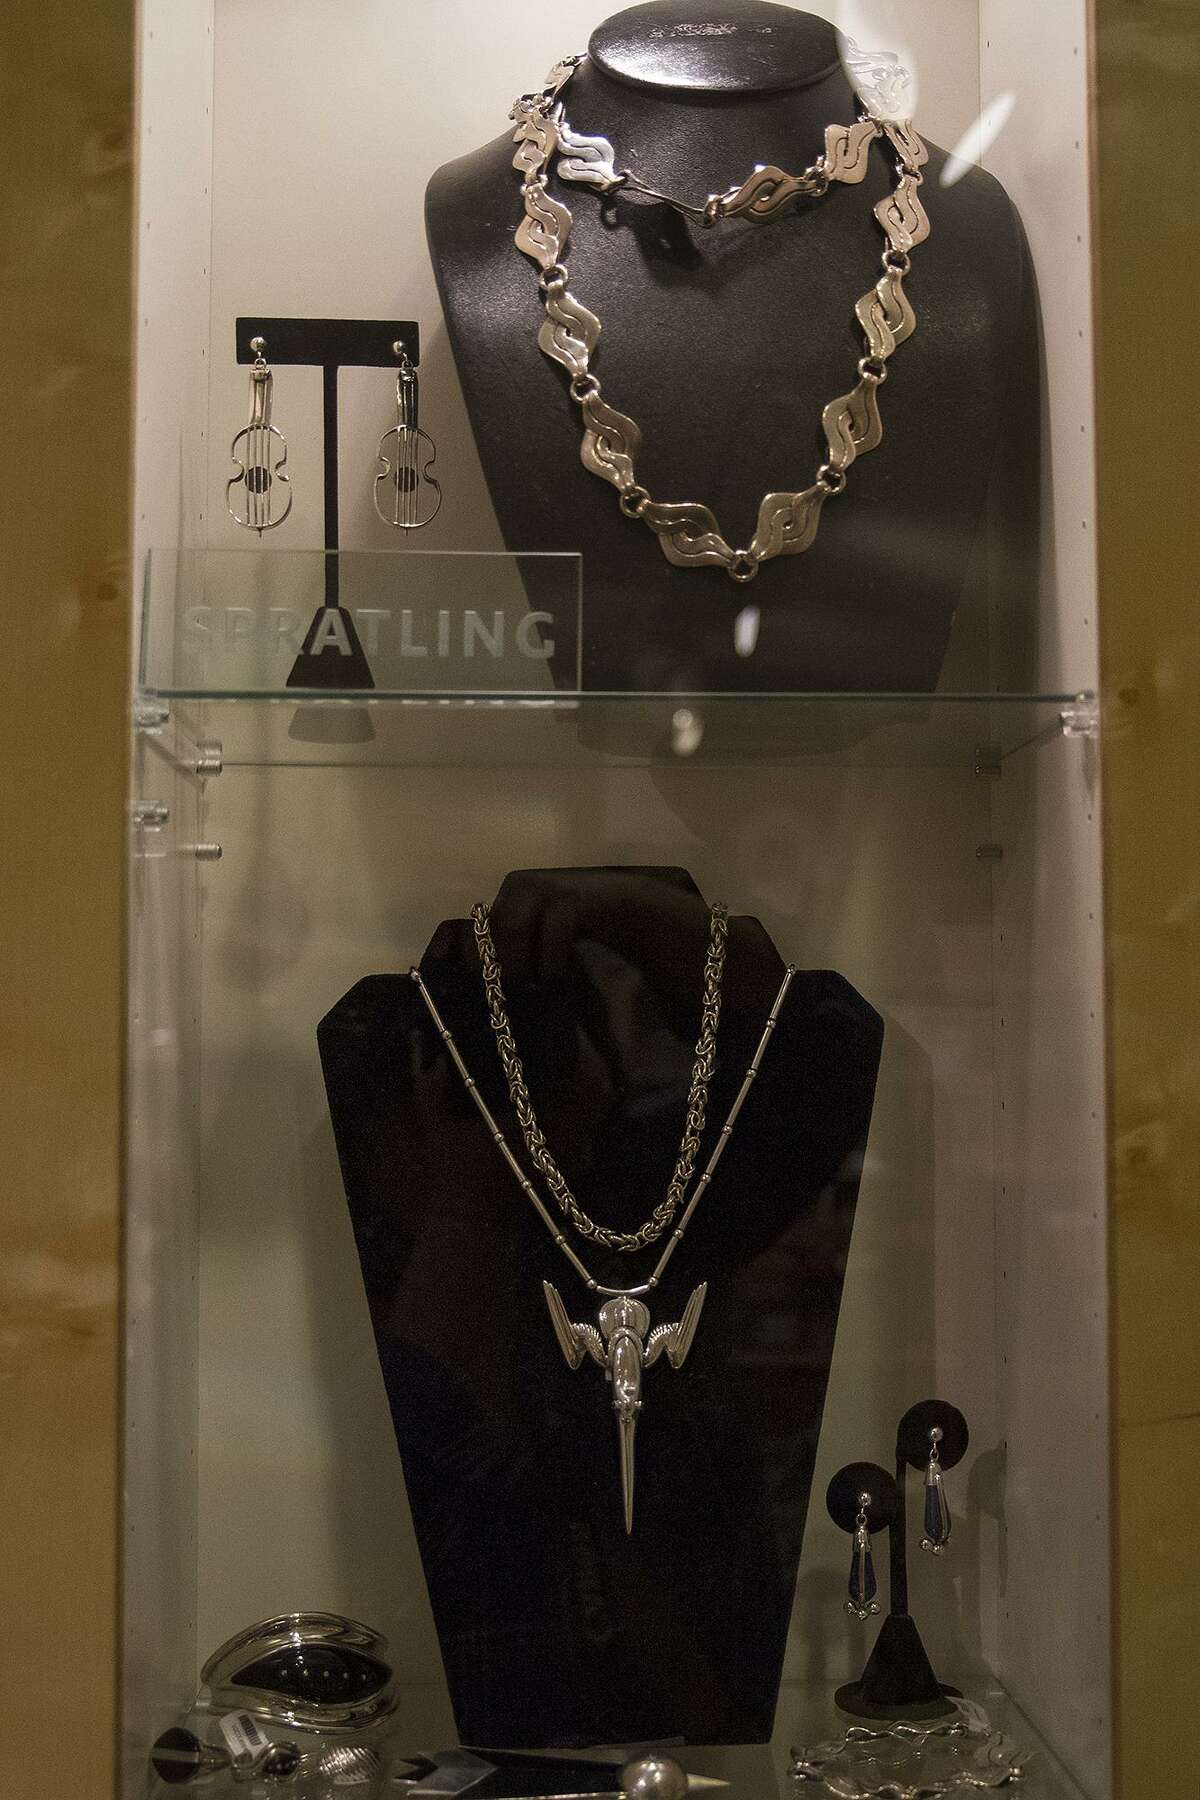 William Spratling jewelry at the San Antonio Museum of Art's gift shop.